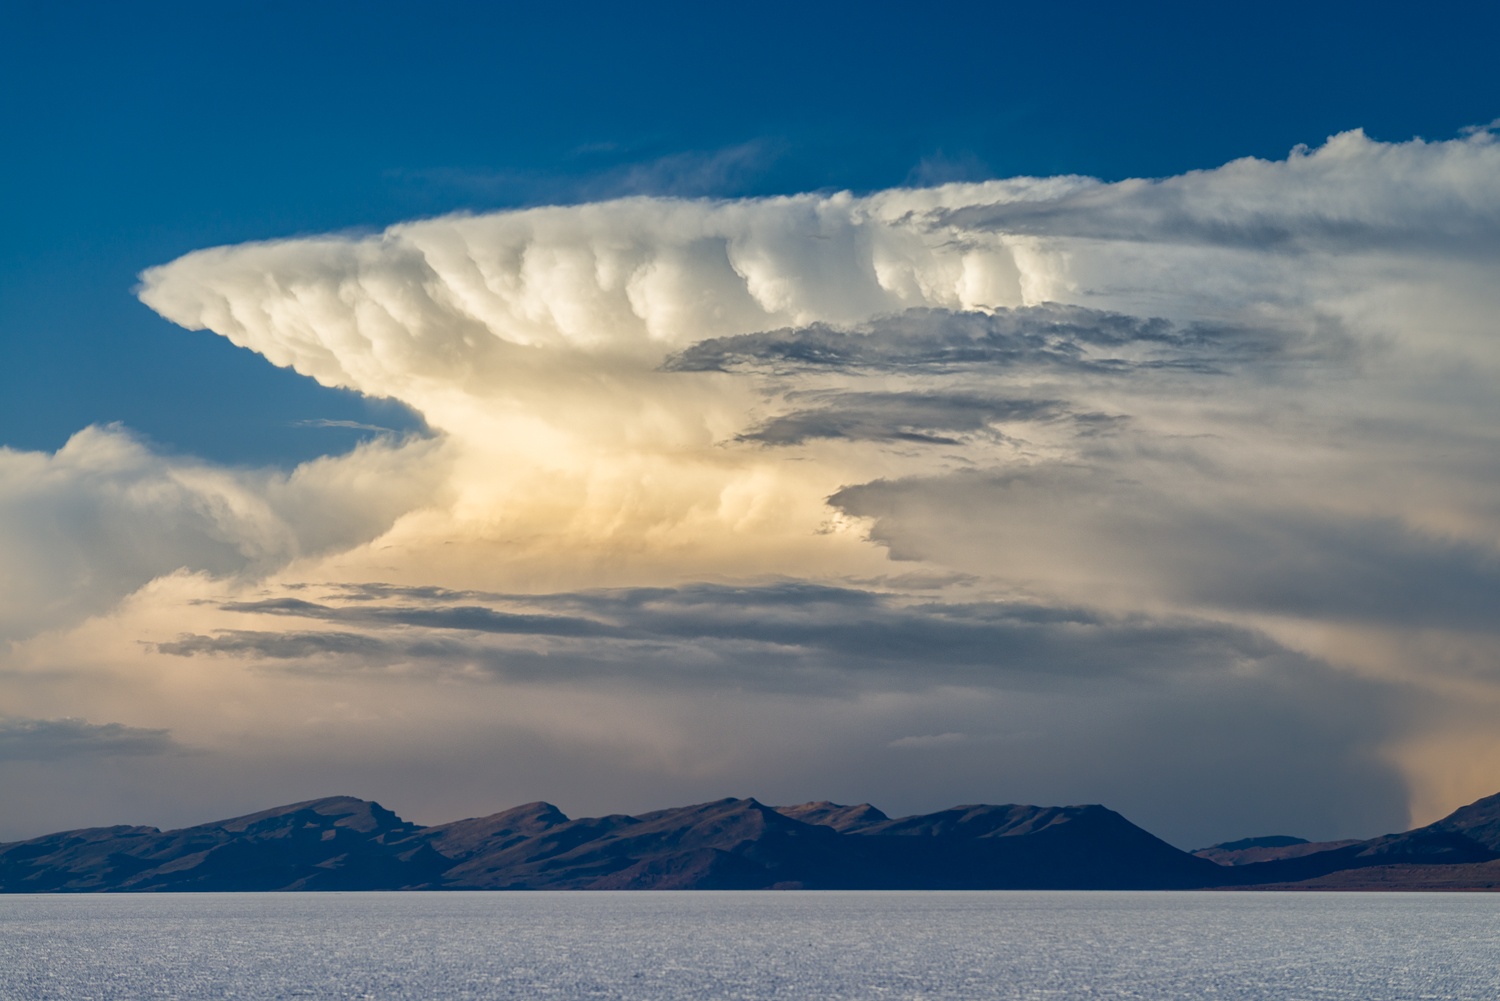 Thunderhead cloud over the Salar de Uyuni salt flats, Bolivia.